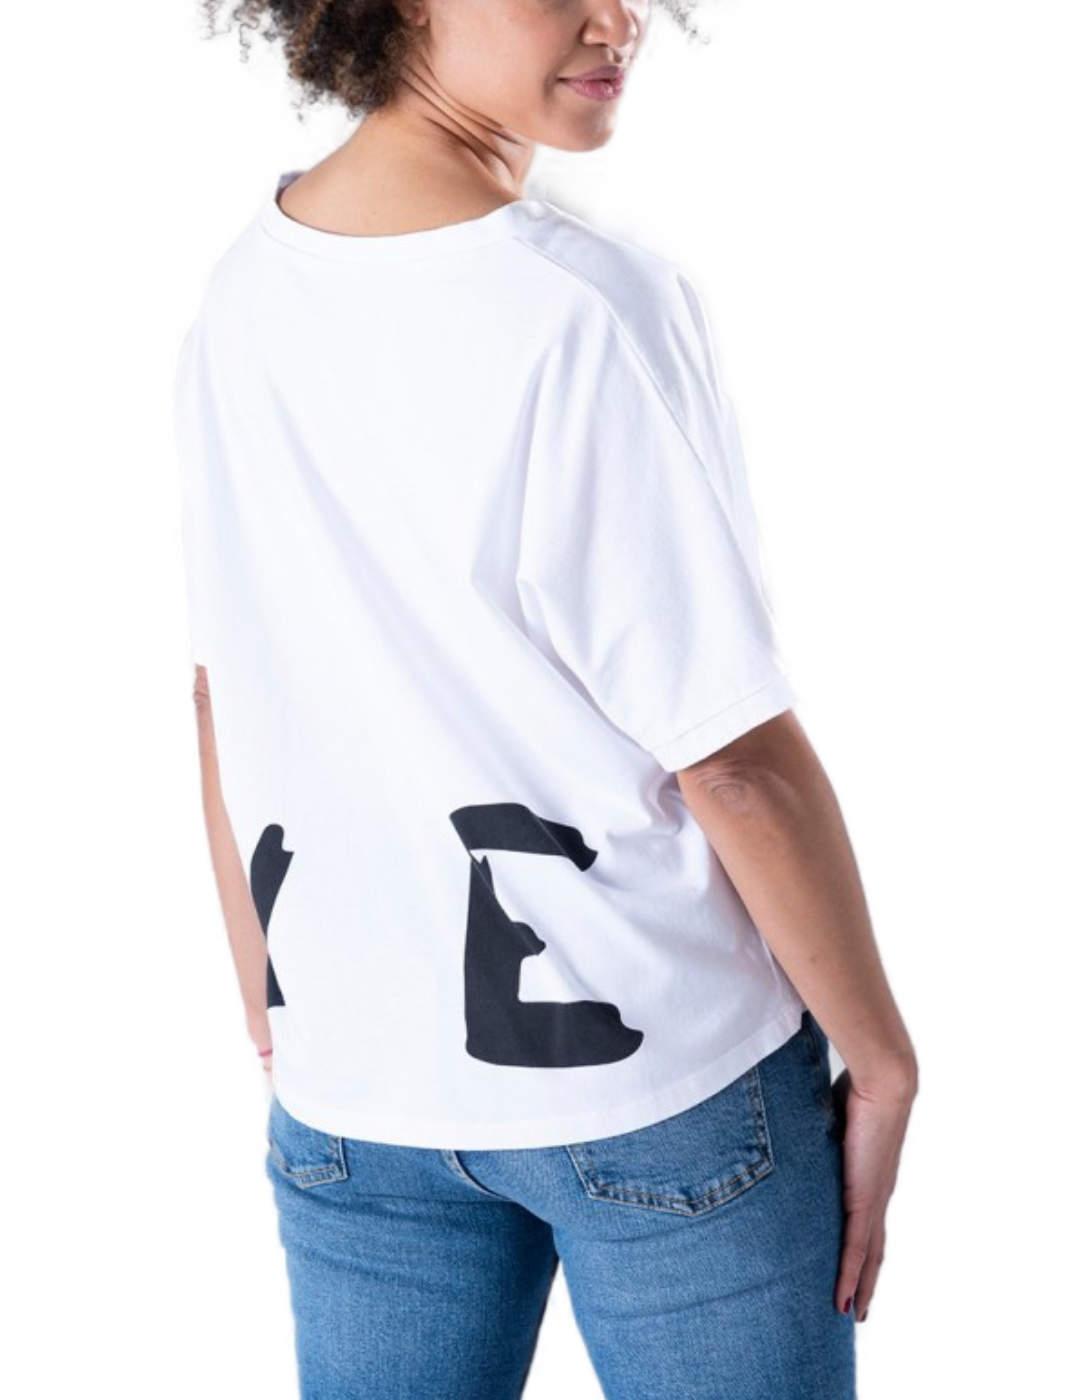 Camiseta Animosa Ayn Love blanca manga corta para mujer